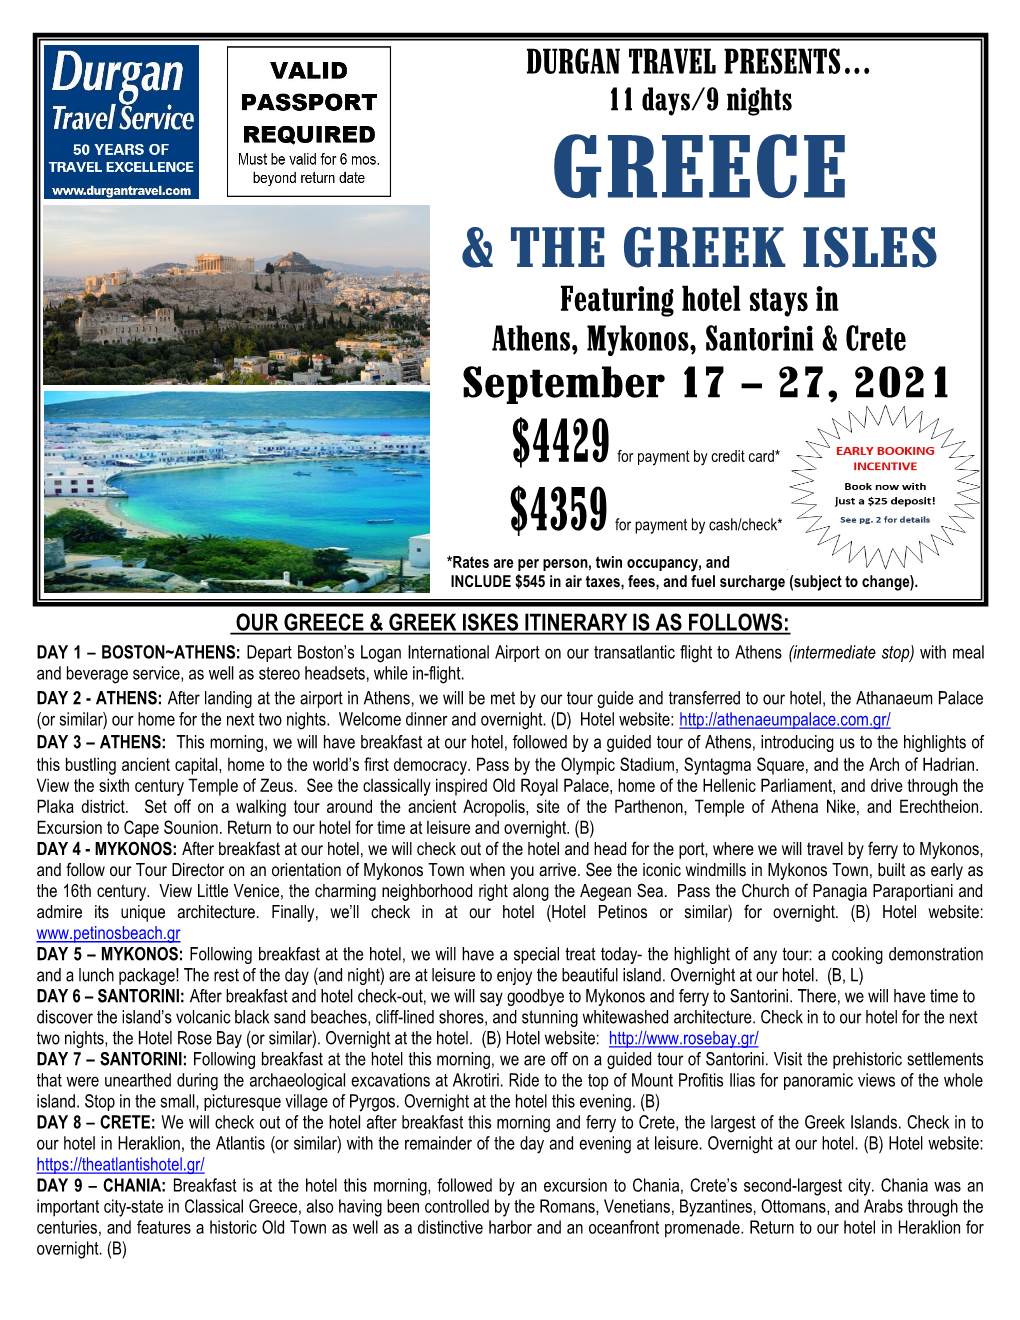 Greece & the Greek Isles